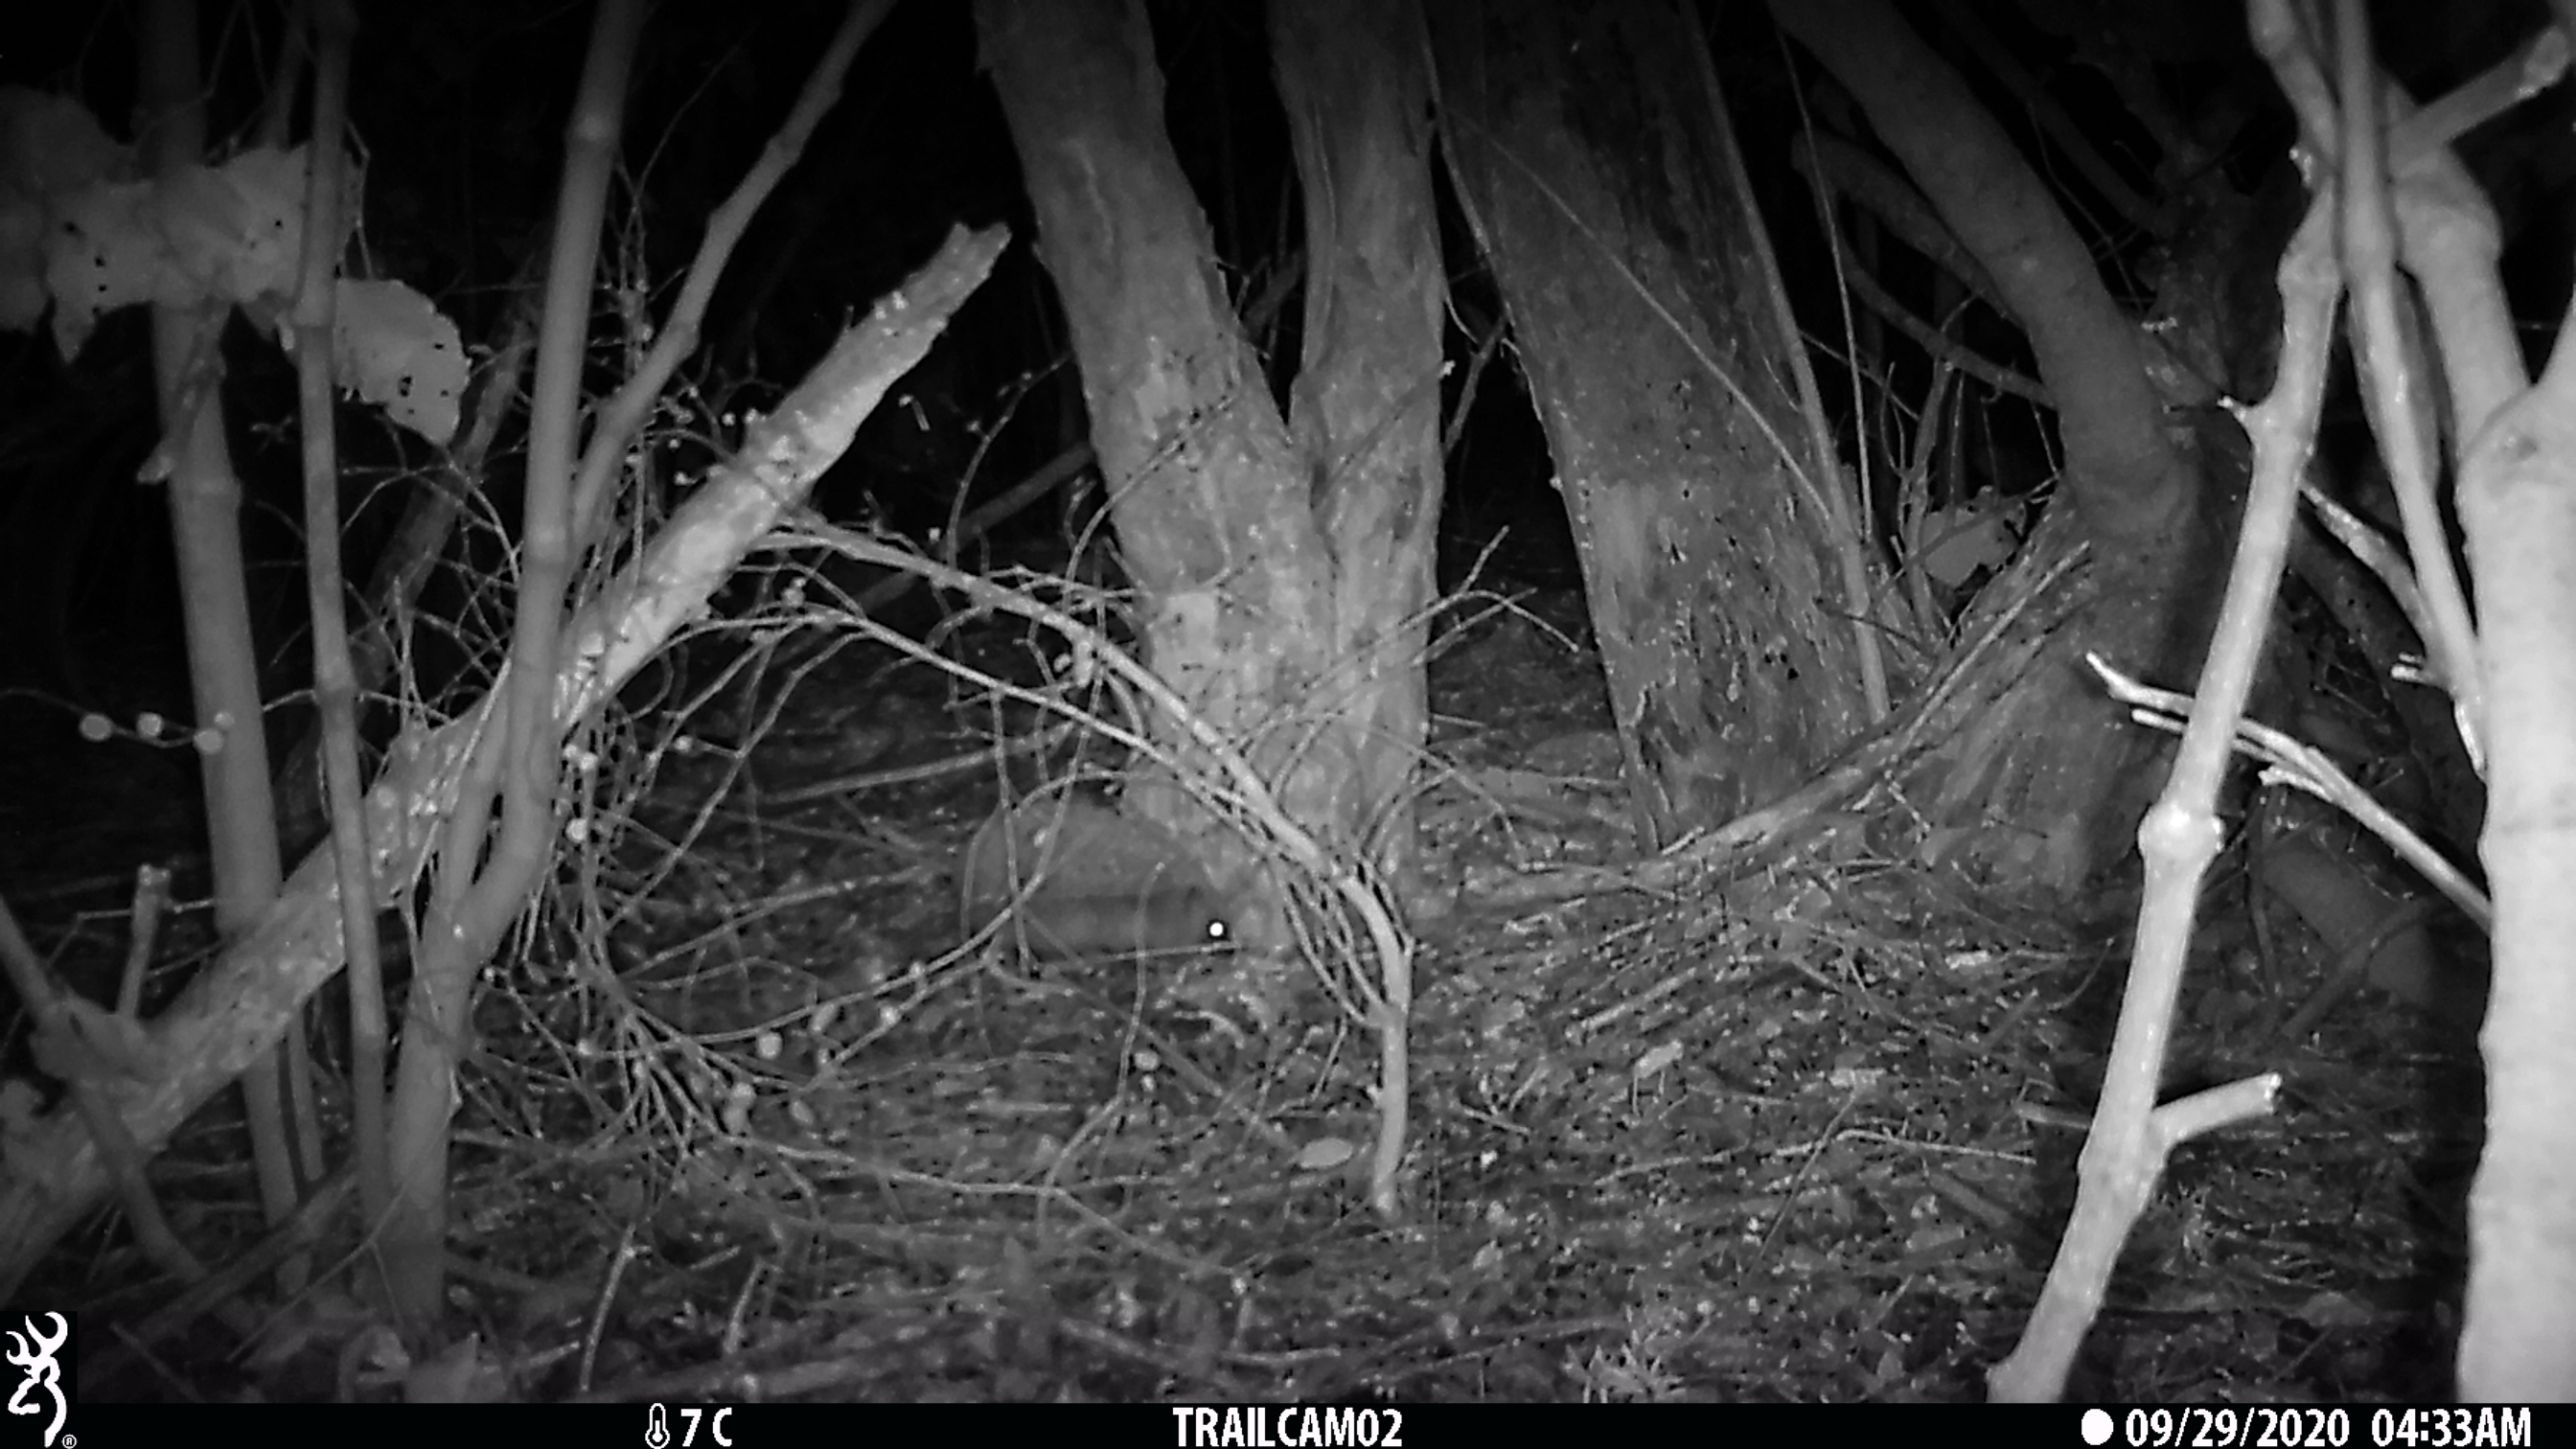 Trail camera photo of a hedgehog